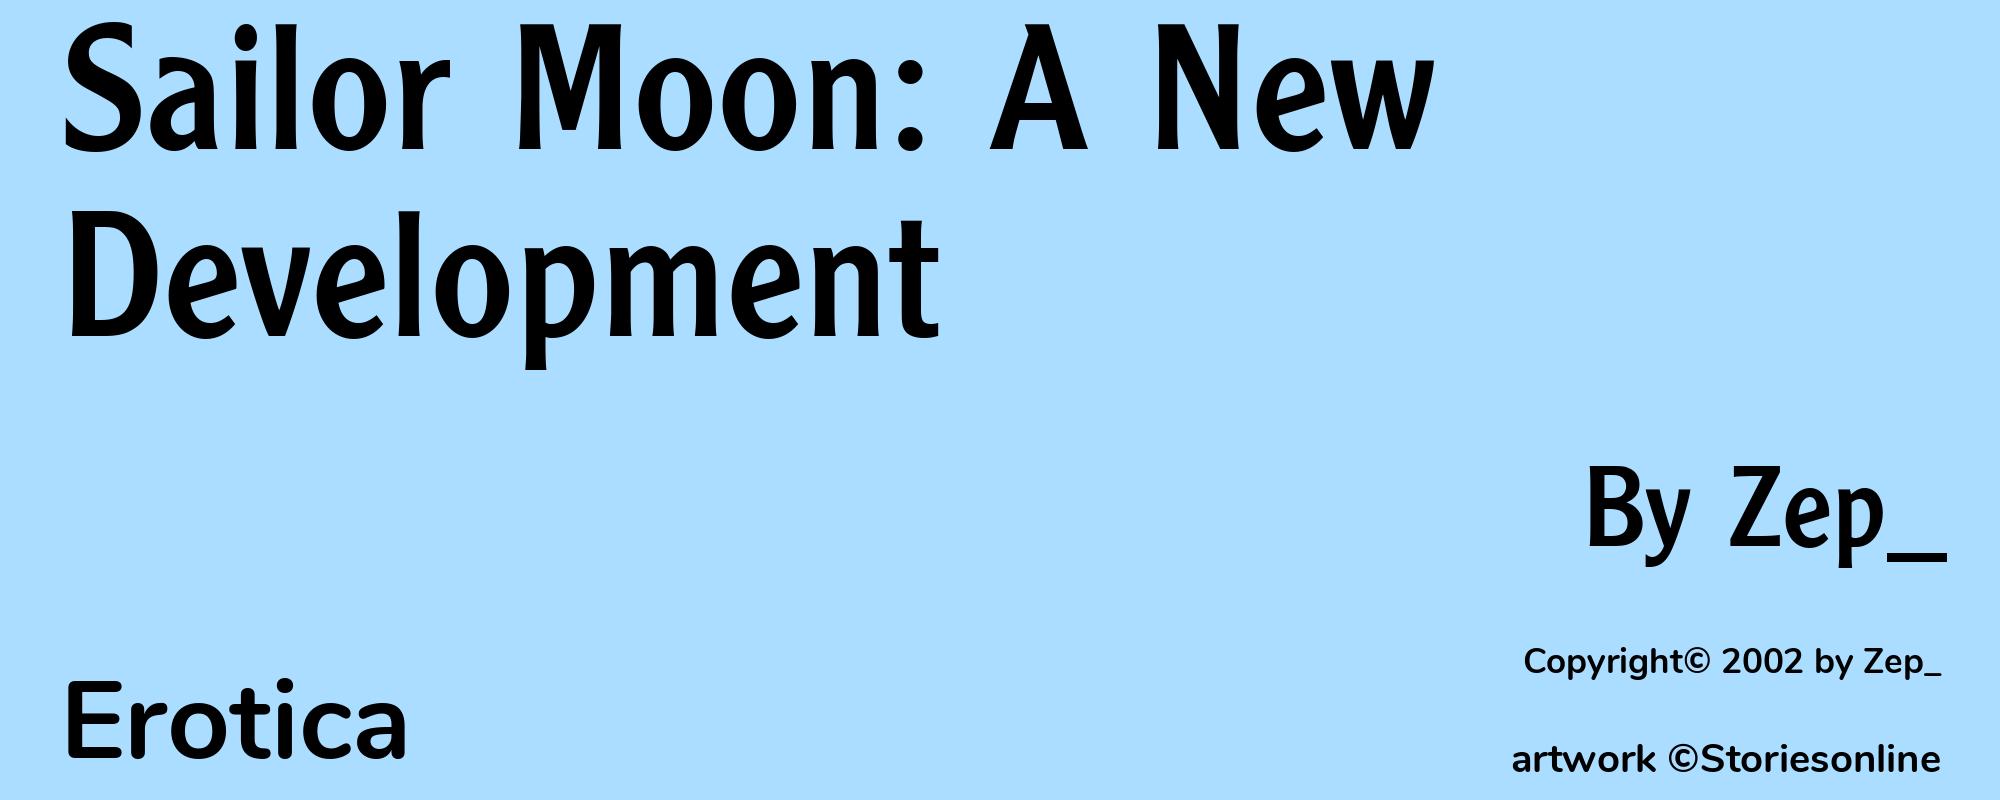 Sailor Moon: A New Development - Cover